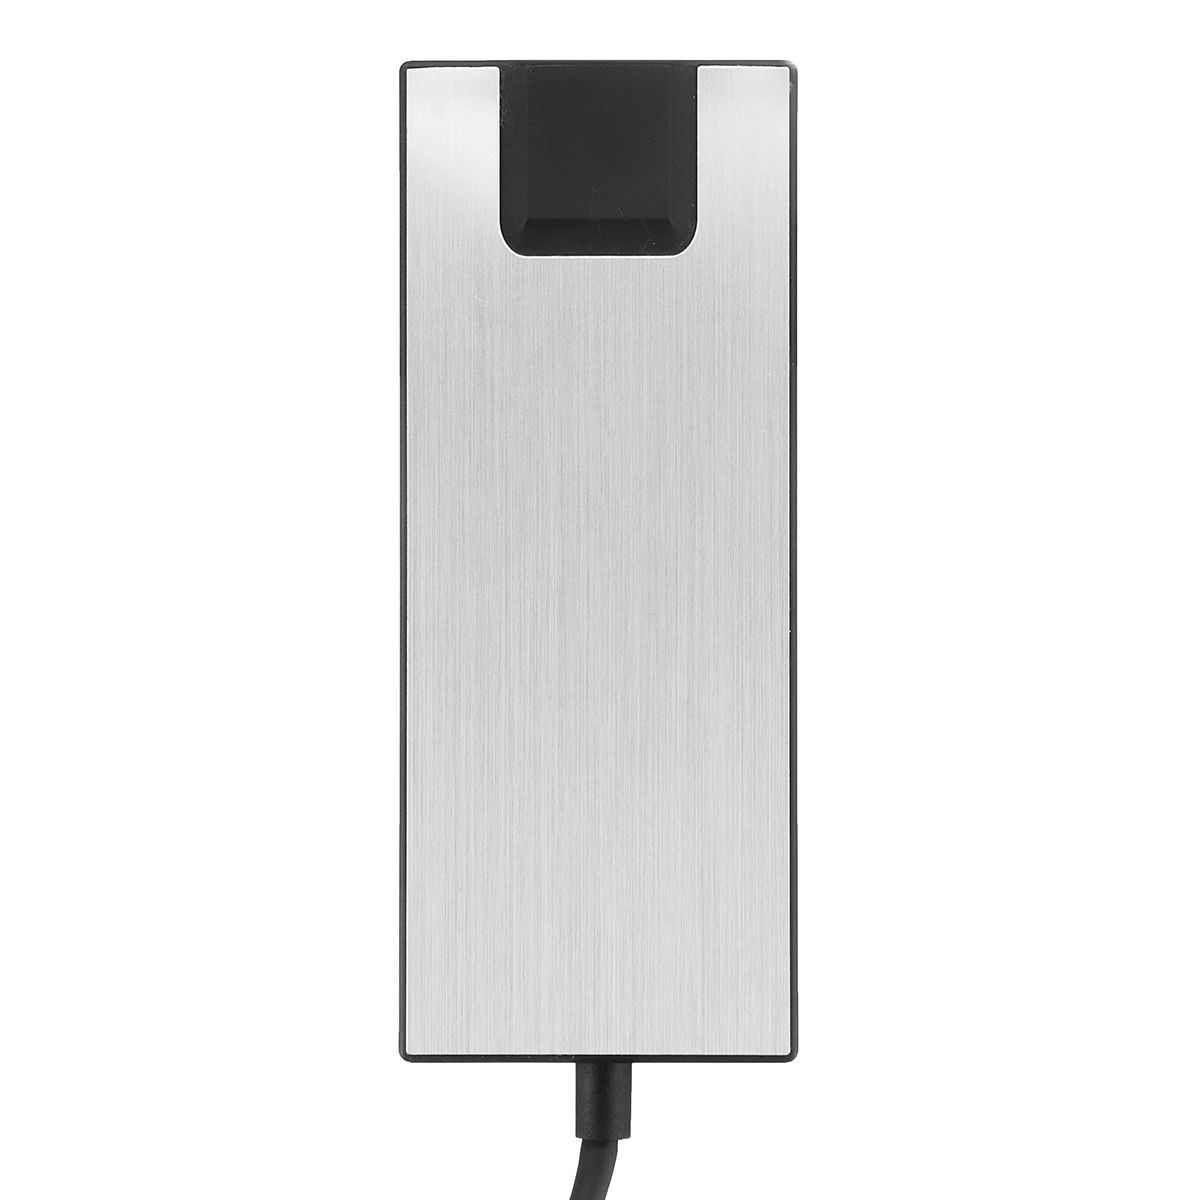 7-in-1-USB-C-Hub-Type-C-to-USB30-Adapter-4K-HD-VGA-Gigabit-Ethernet-Converter-PD-Fast-Charging-SDTF--1747752